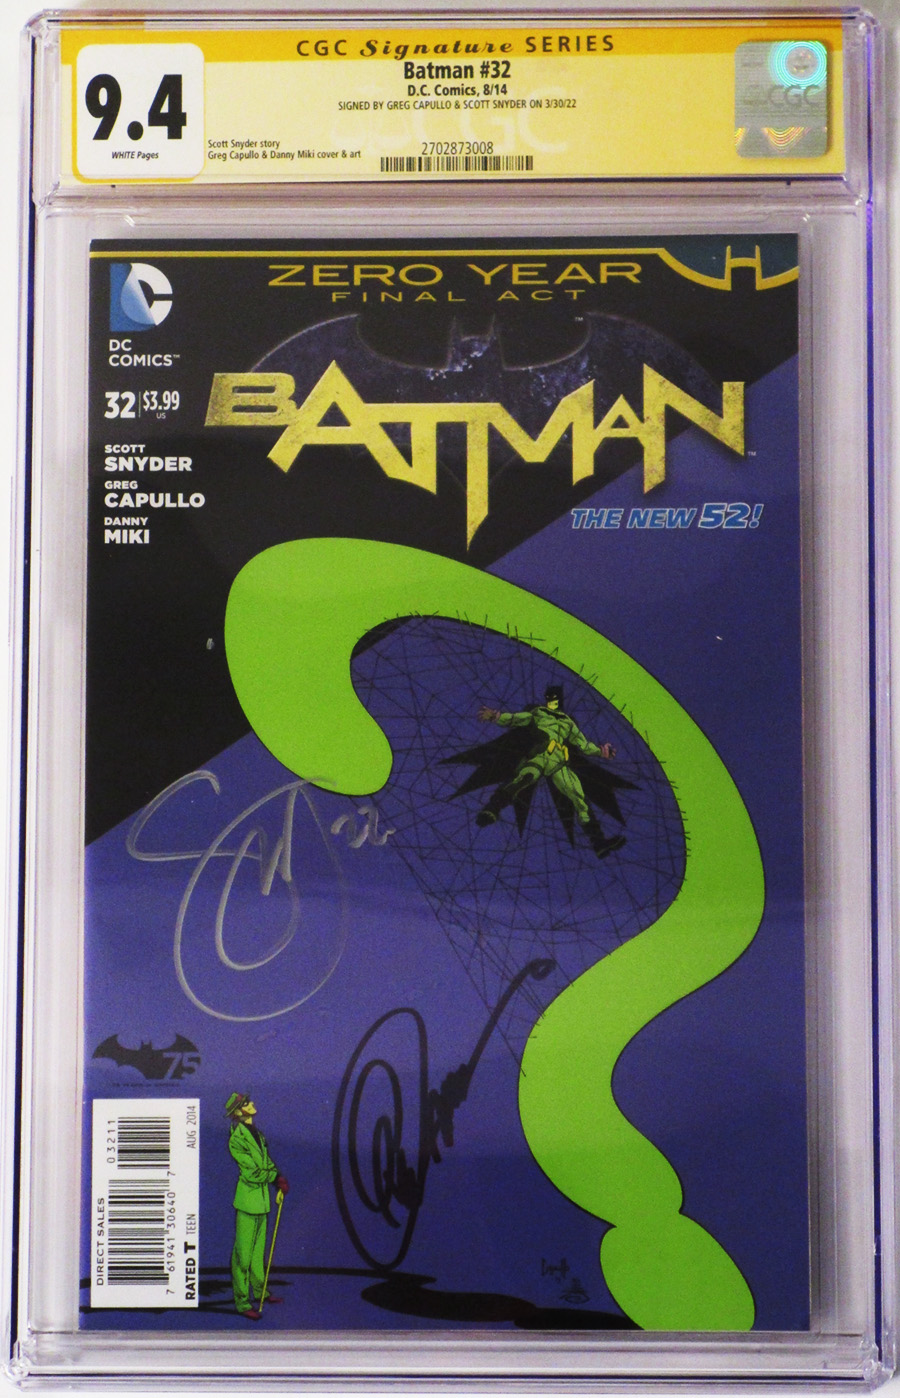 Batman Vol 2 #32 Cover F Regular Greg Capullo Cover (Zero Year Tie-In) Signed By Scott Snyder and Greg Capullo CGC 9.4